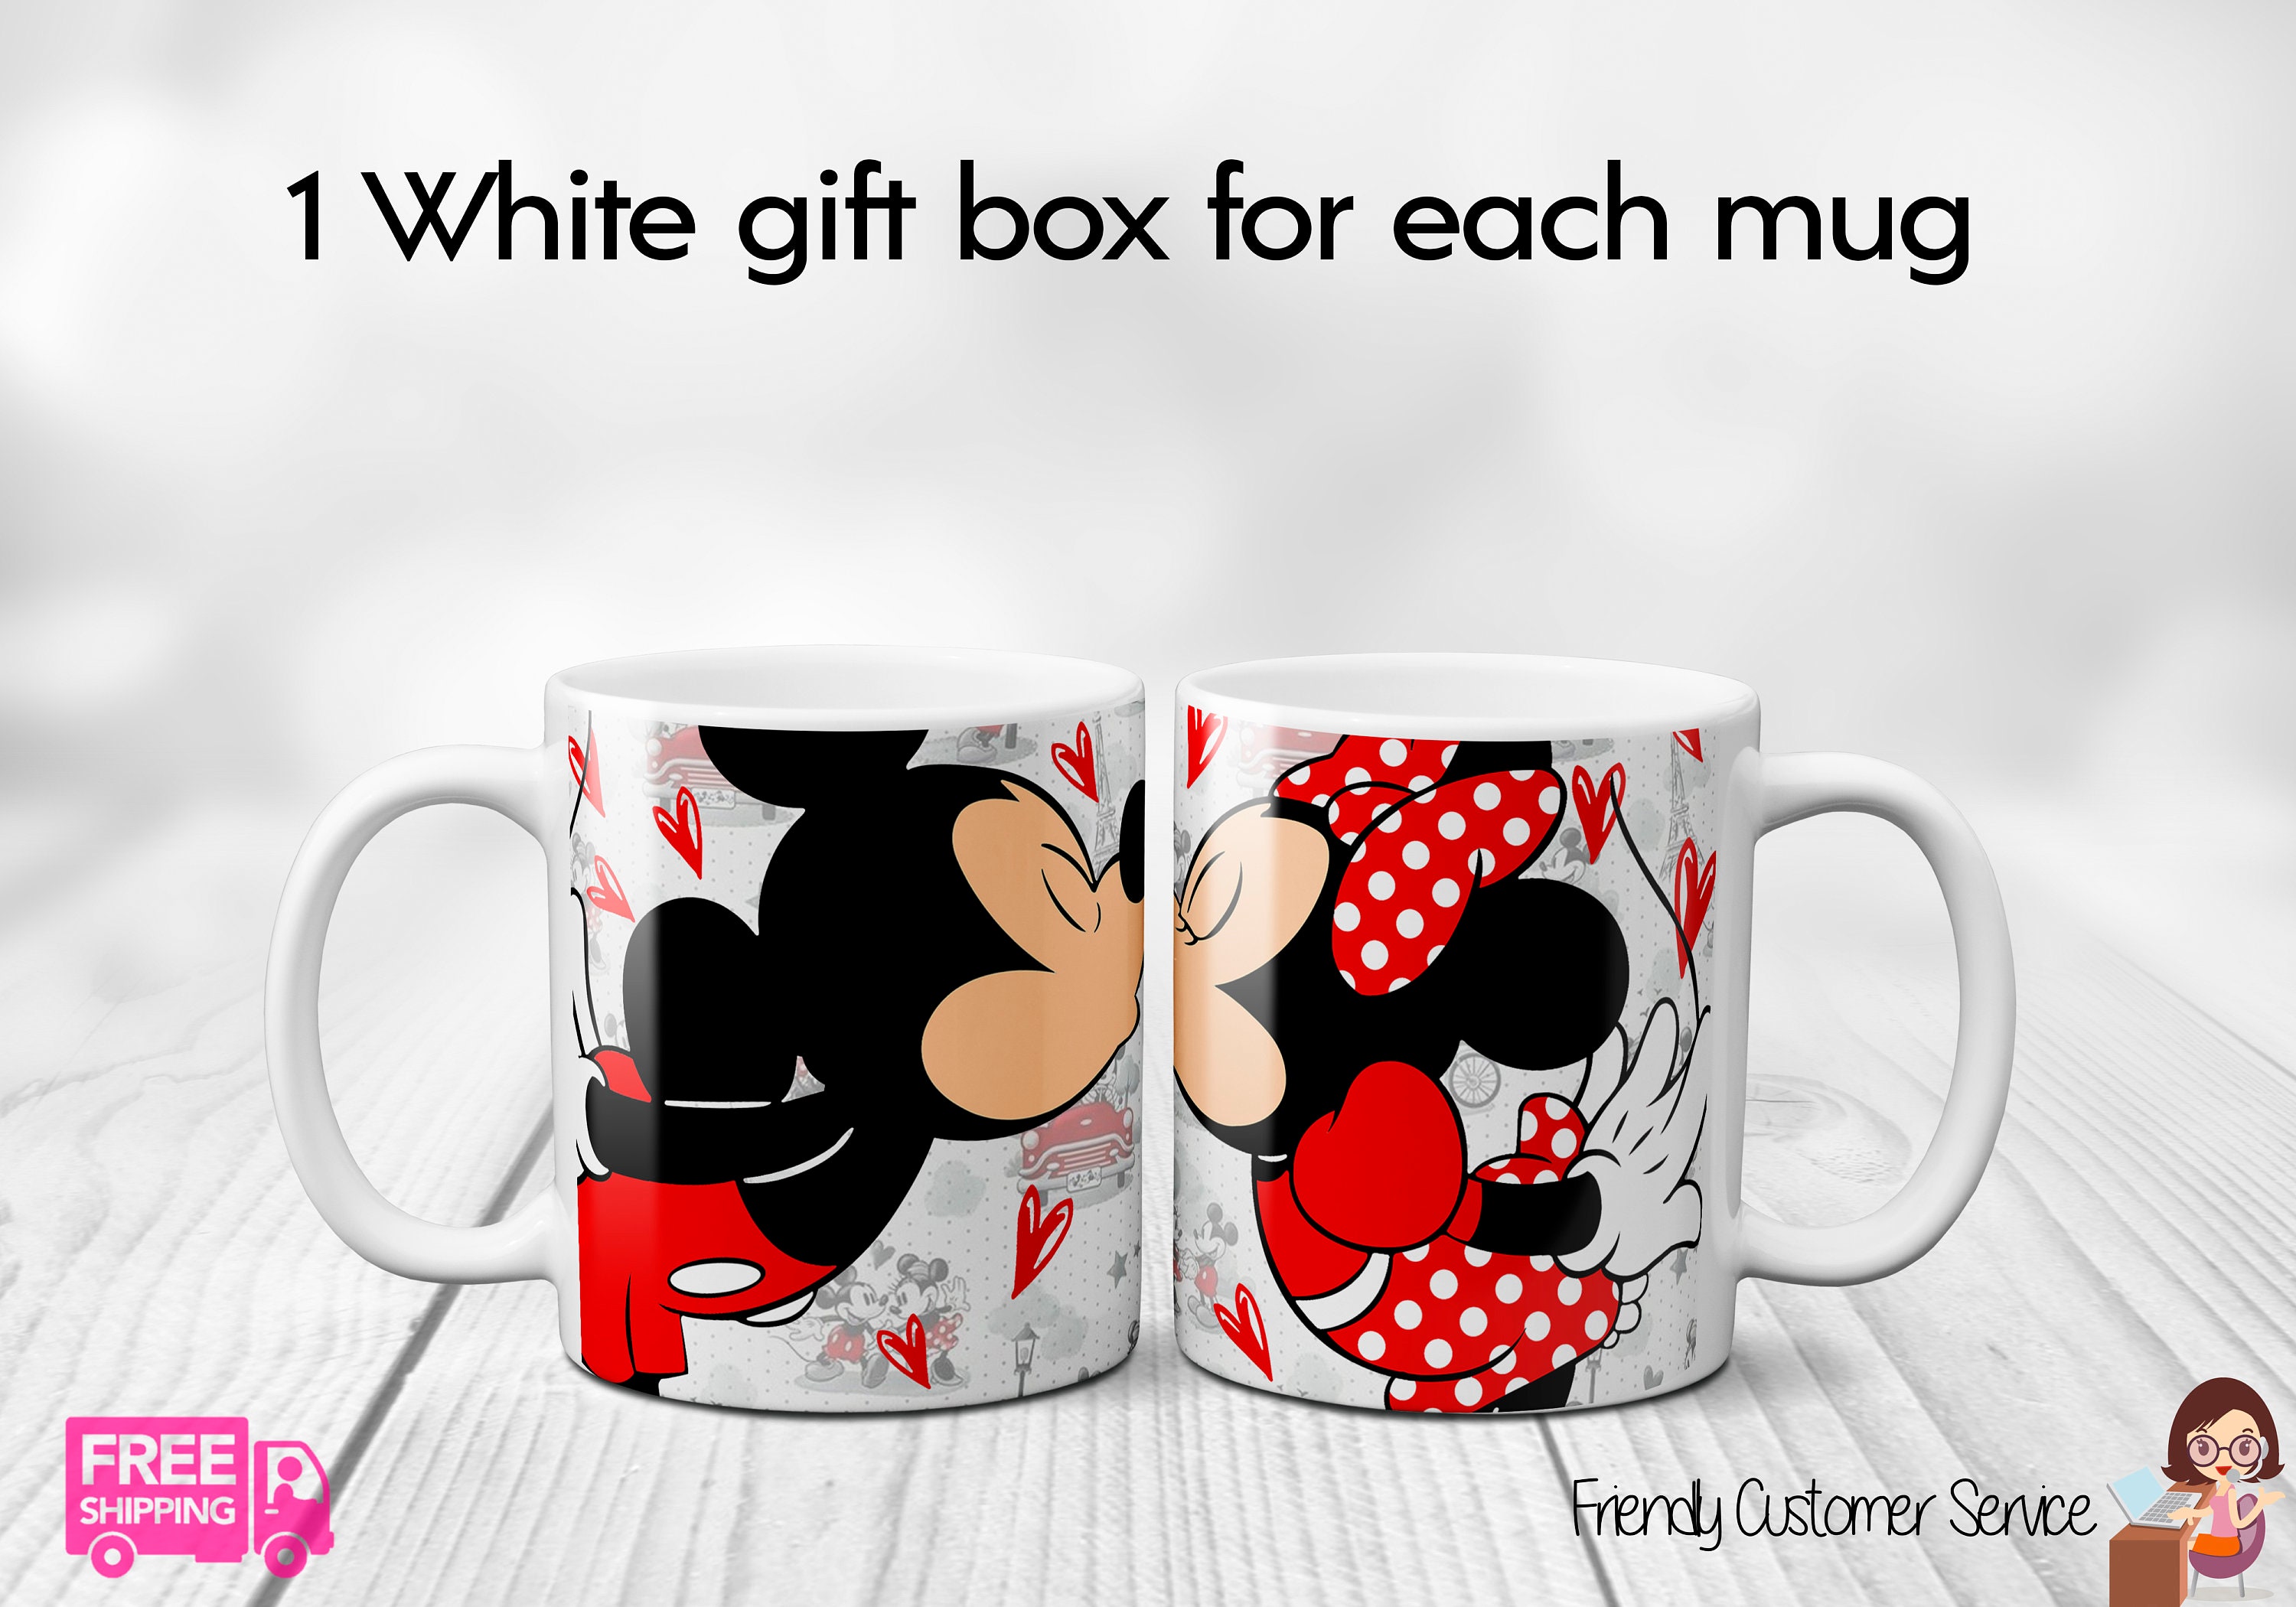 disney parks ceramic coffee cup mug mickey mouse poses new